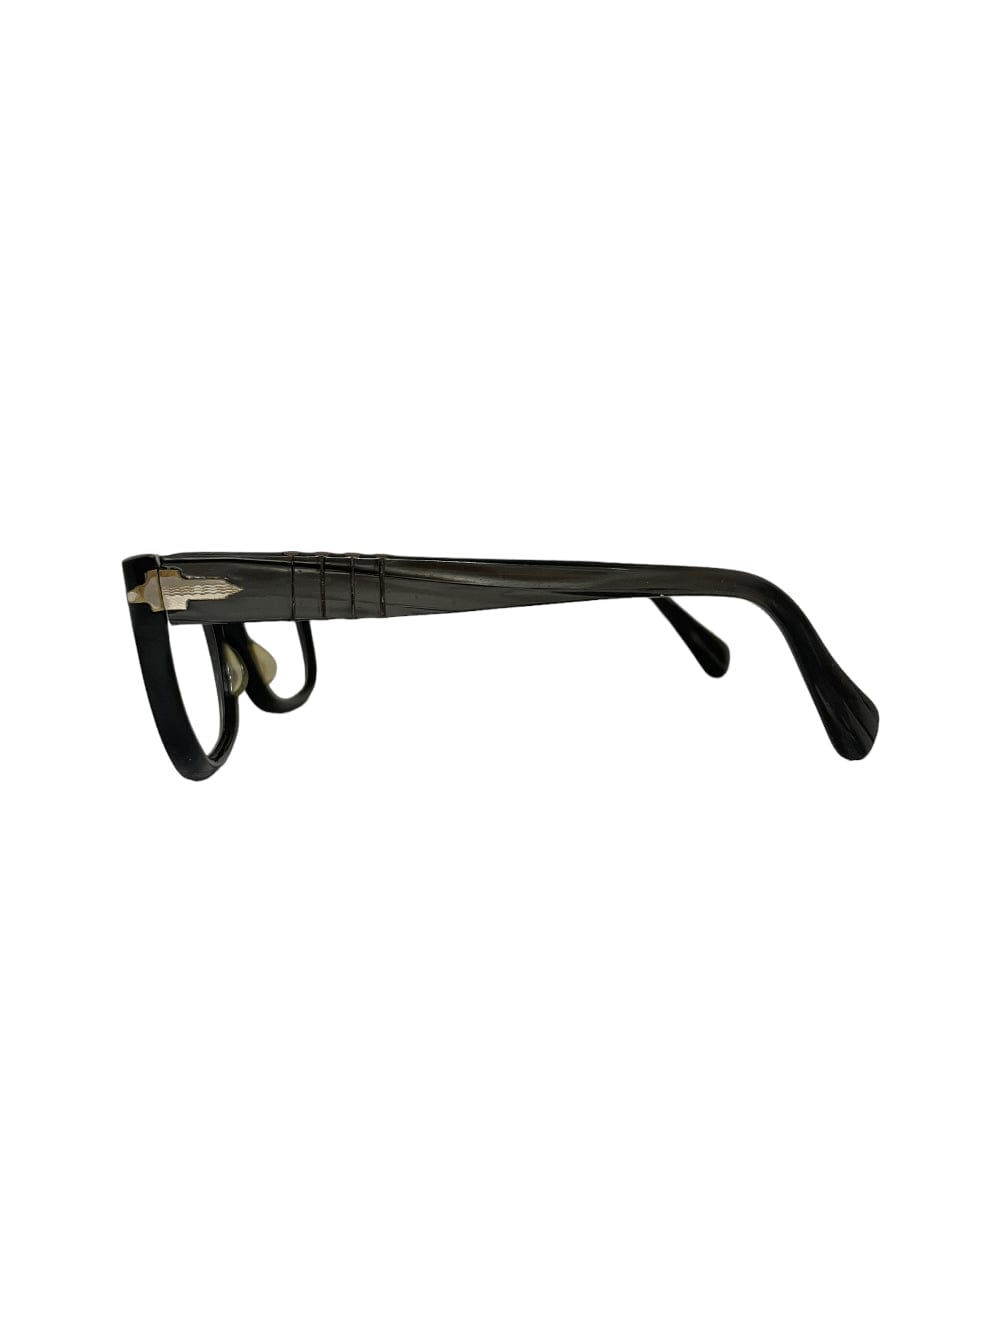 Shop Persol Meflecto - Havana Grey Sunglasses